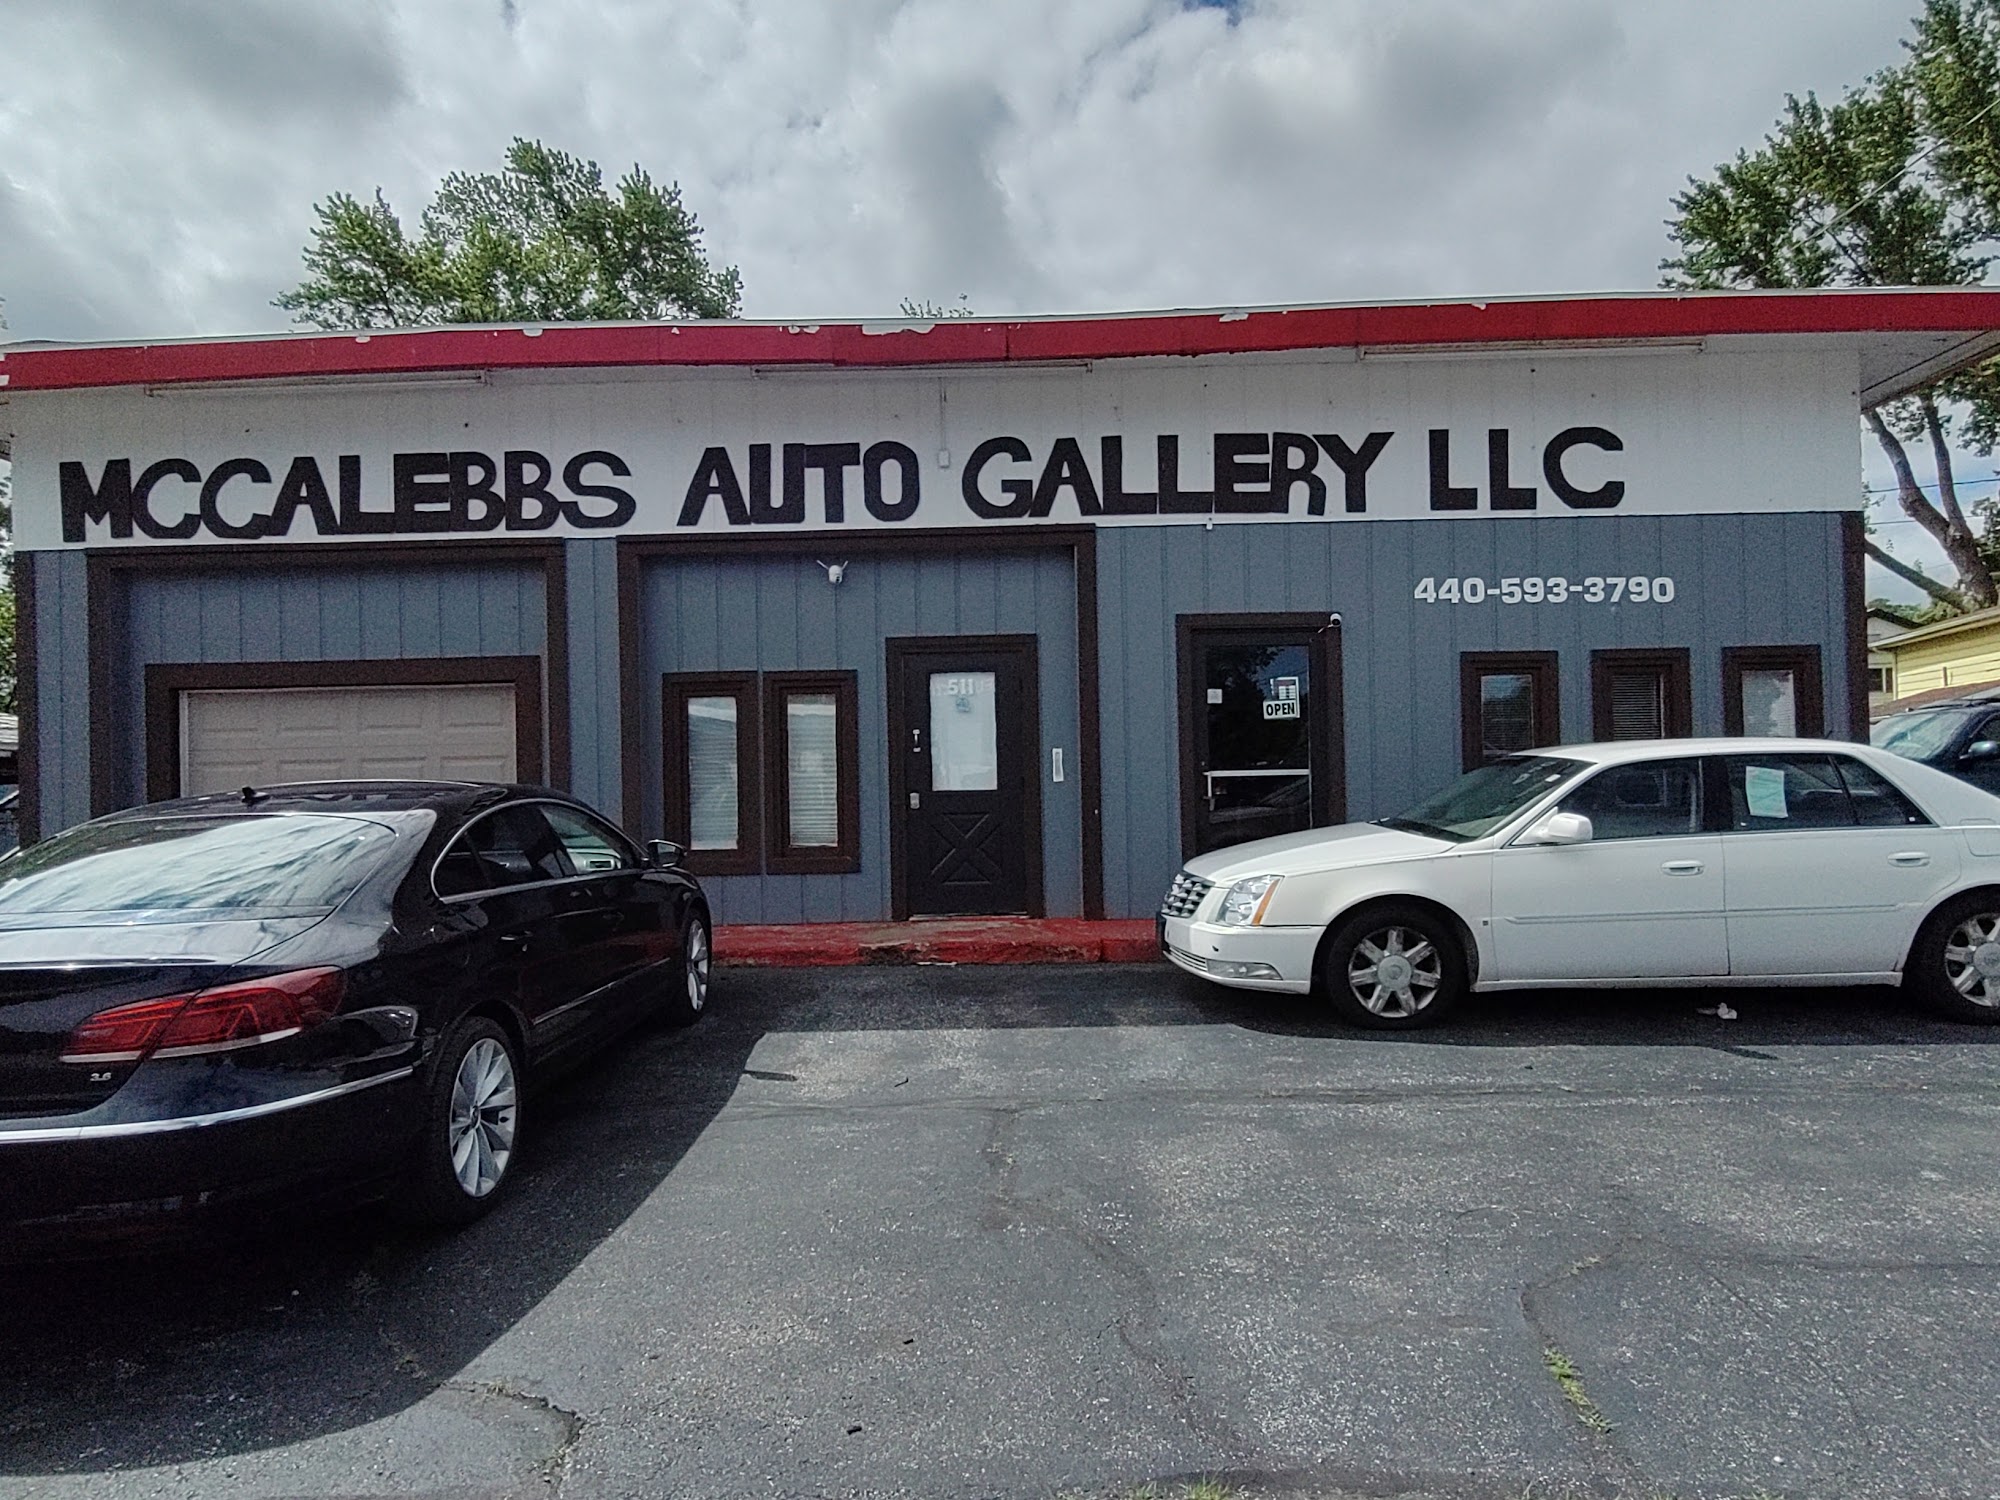 McCalebb's Auto Gallery